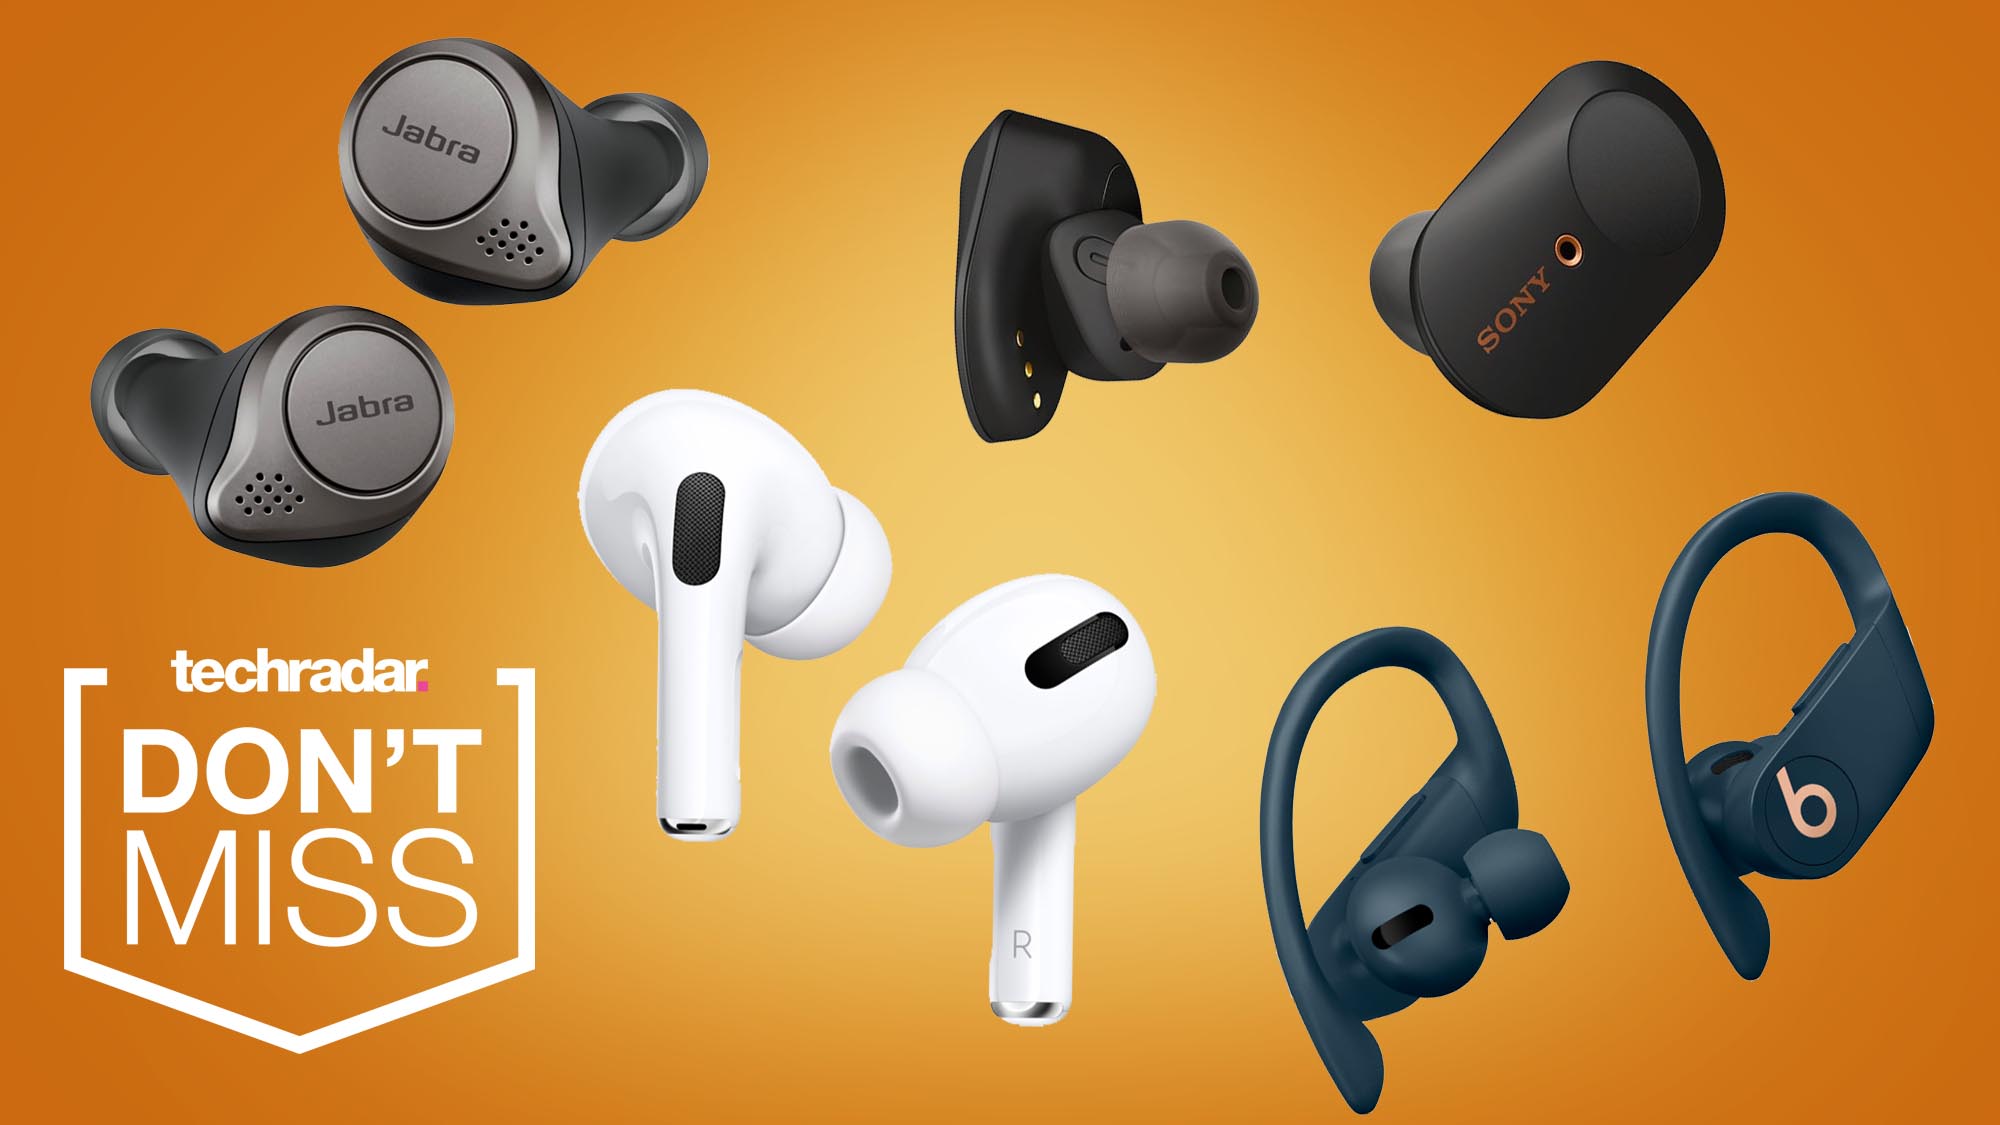 Beats wireless headphones get a $70 price cut at Amazon